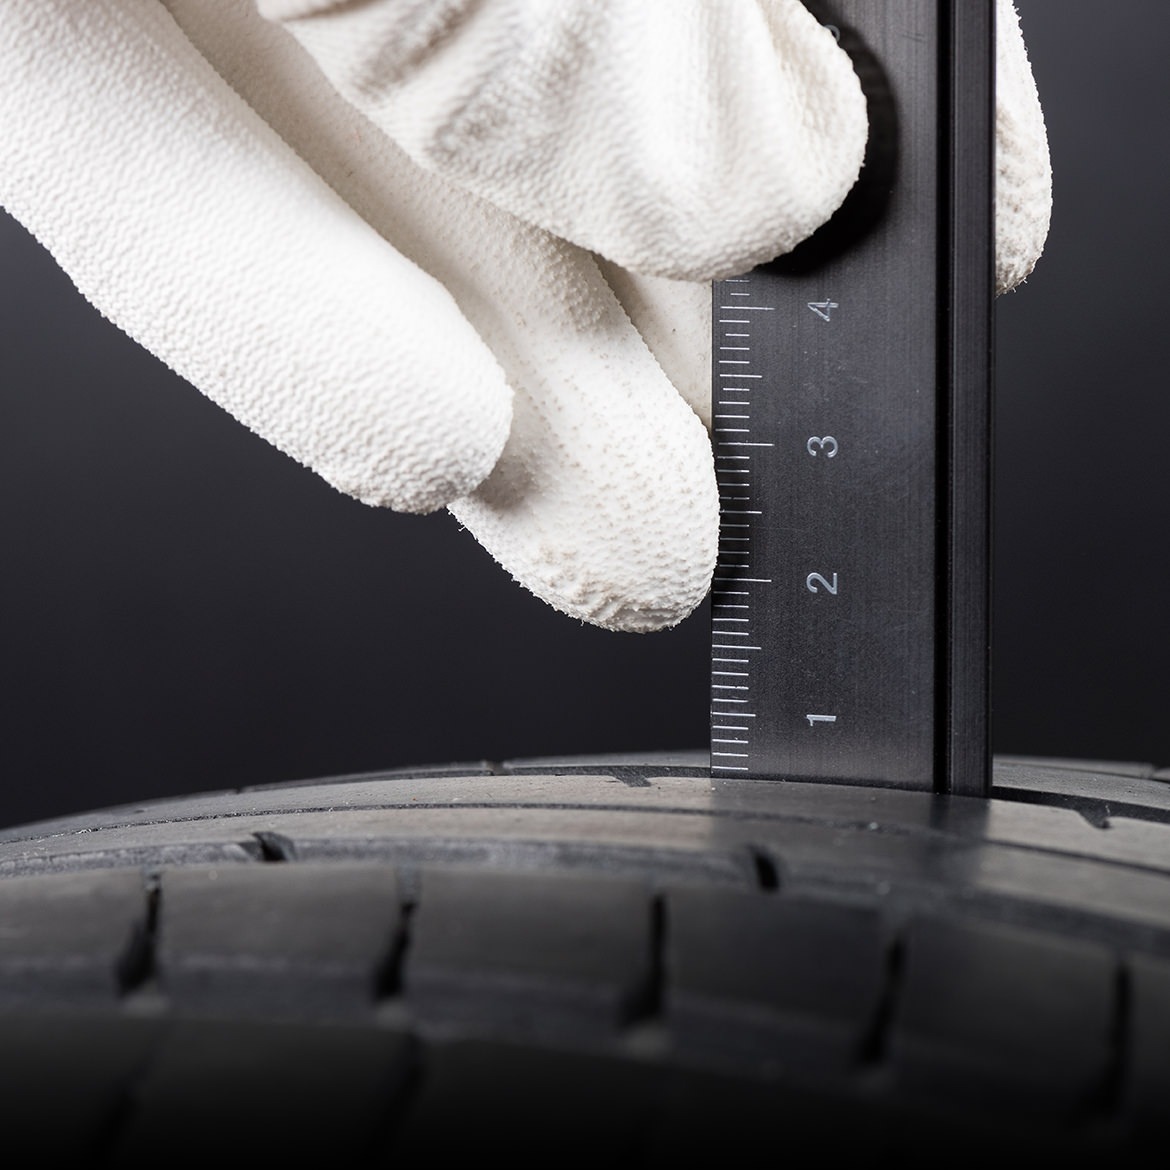 Tyre measurement